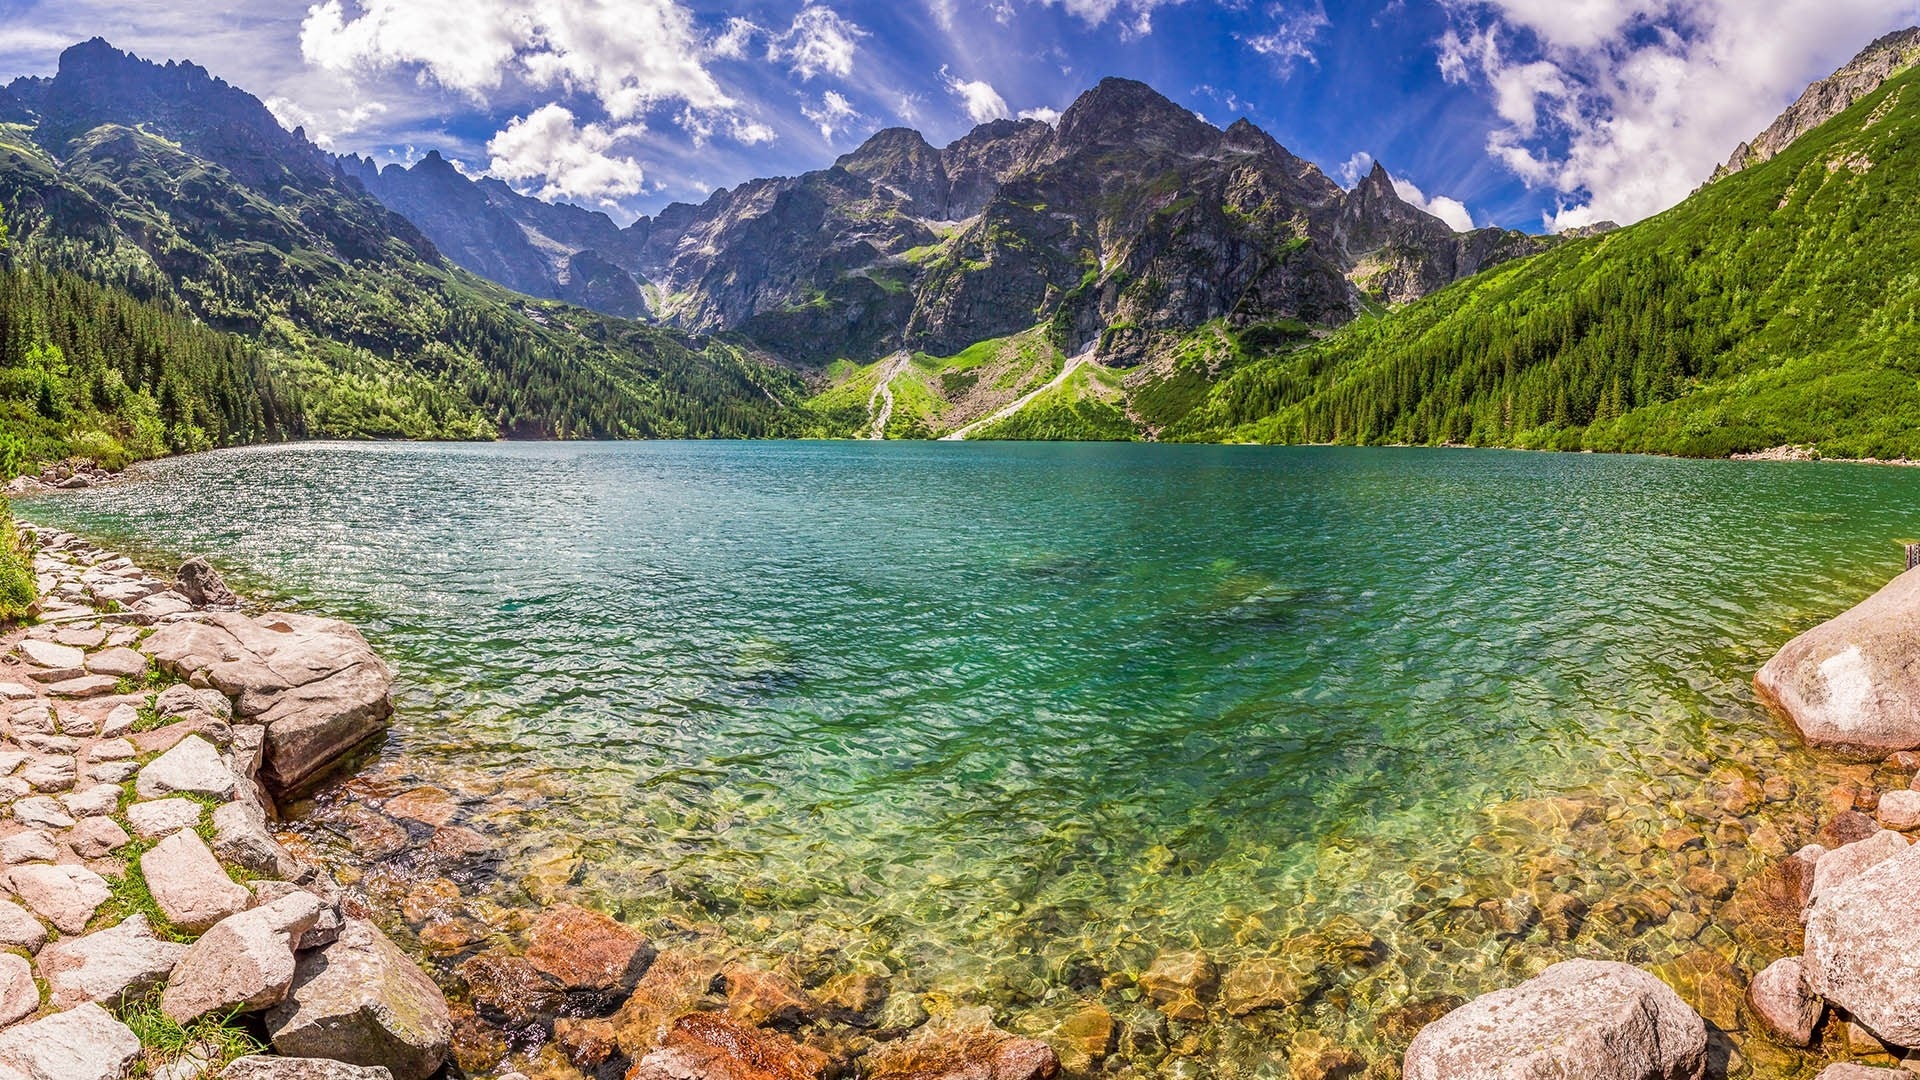 Morskie oko lake in tatra national park poland x rwallpapers